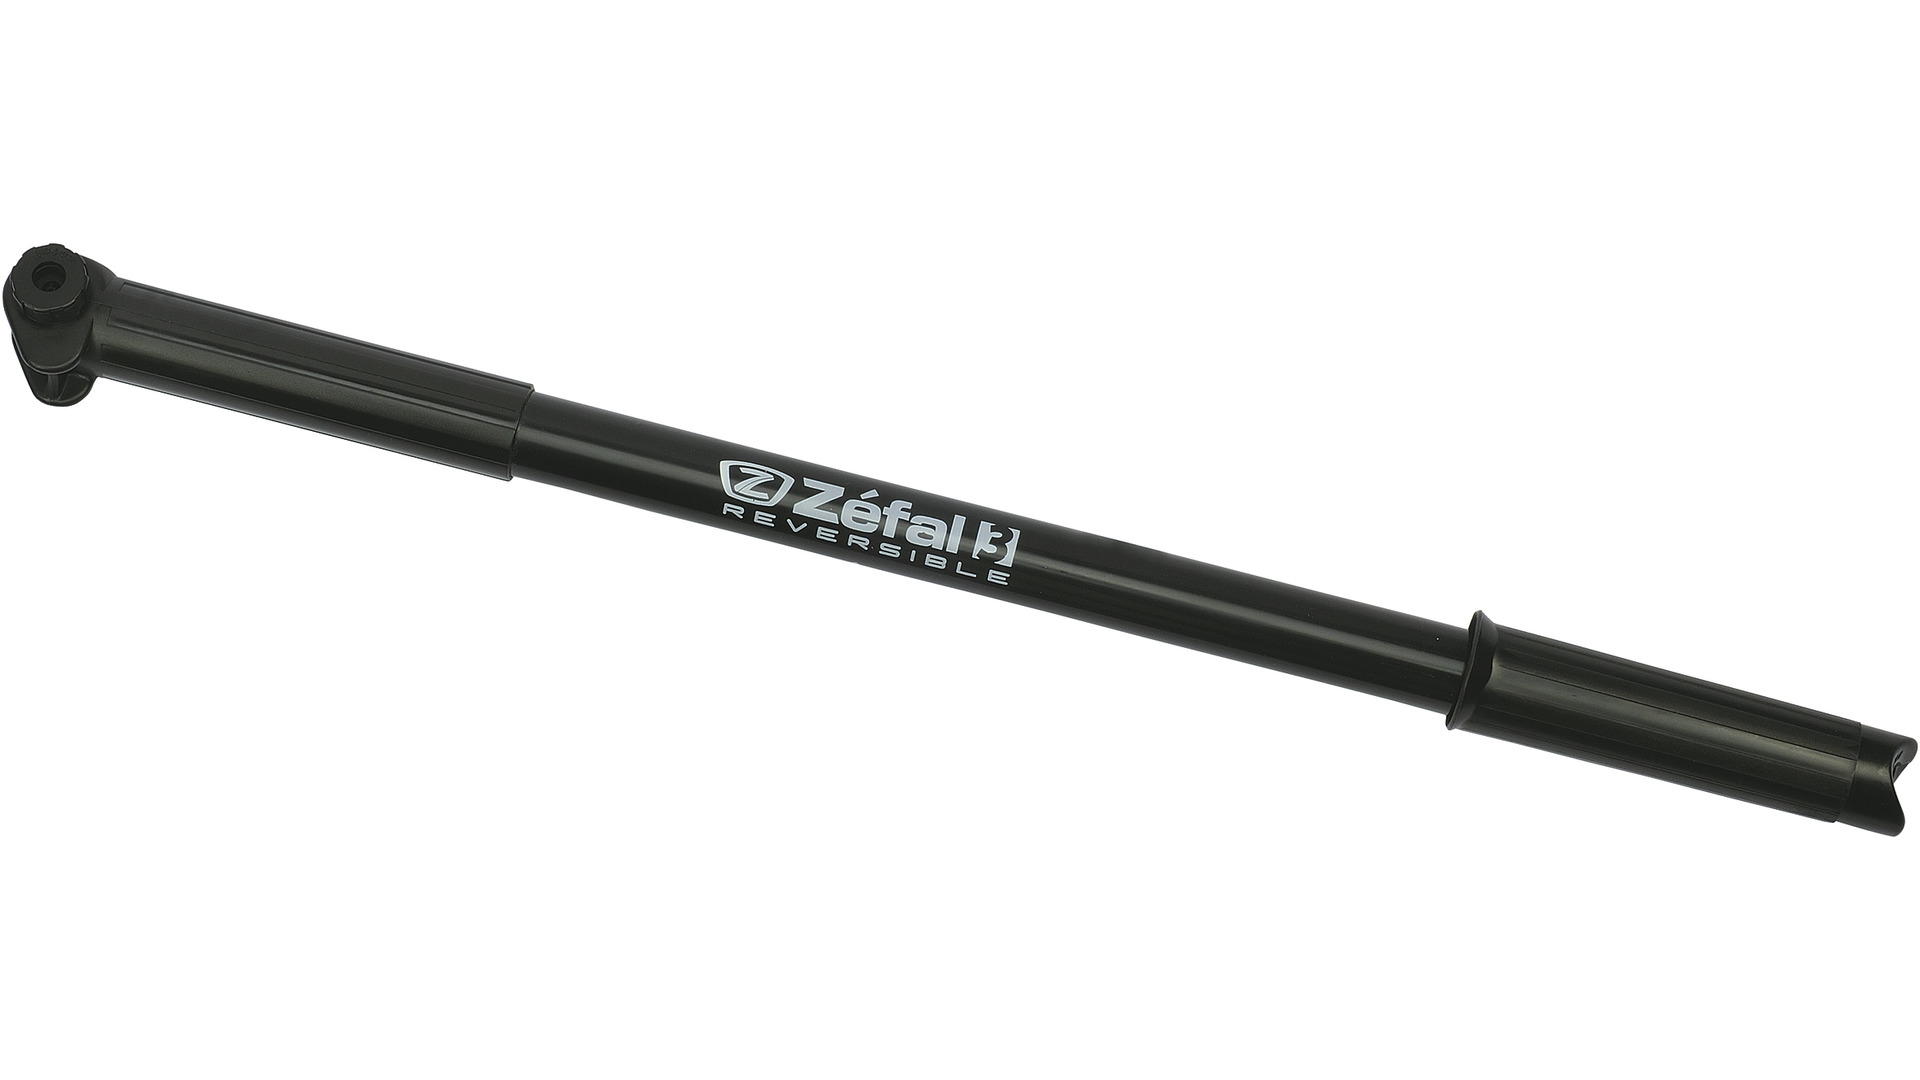 Zéfal Rahmenpumpe Reversible, Rahmenhöhe 59-64 cm, Spitzenabstand 510-560 mm - Bild 1